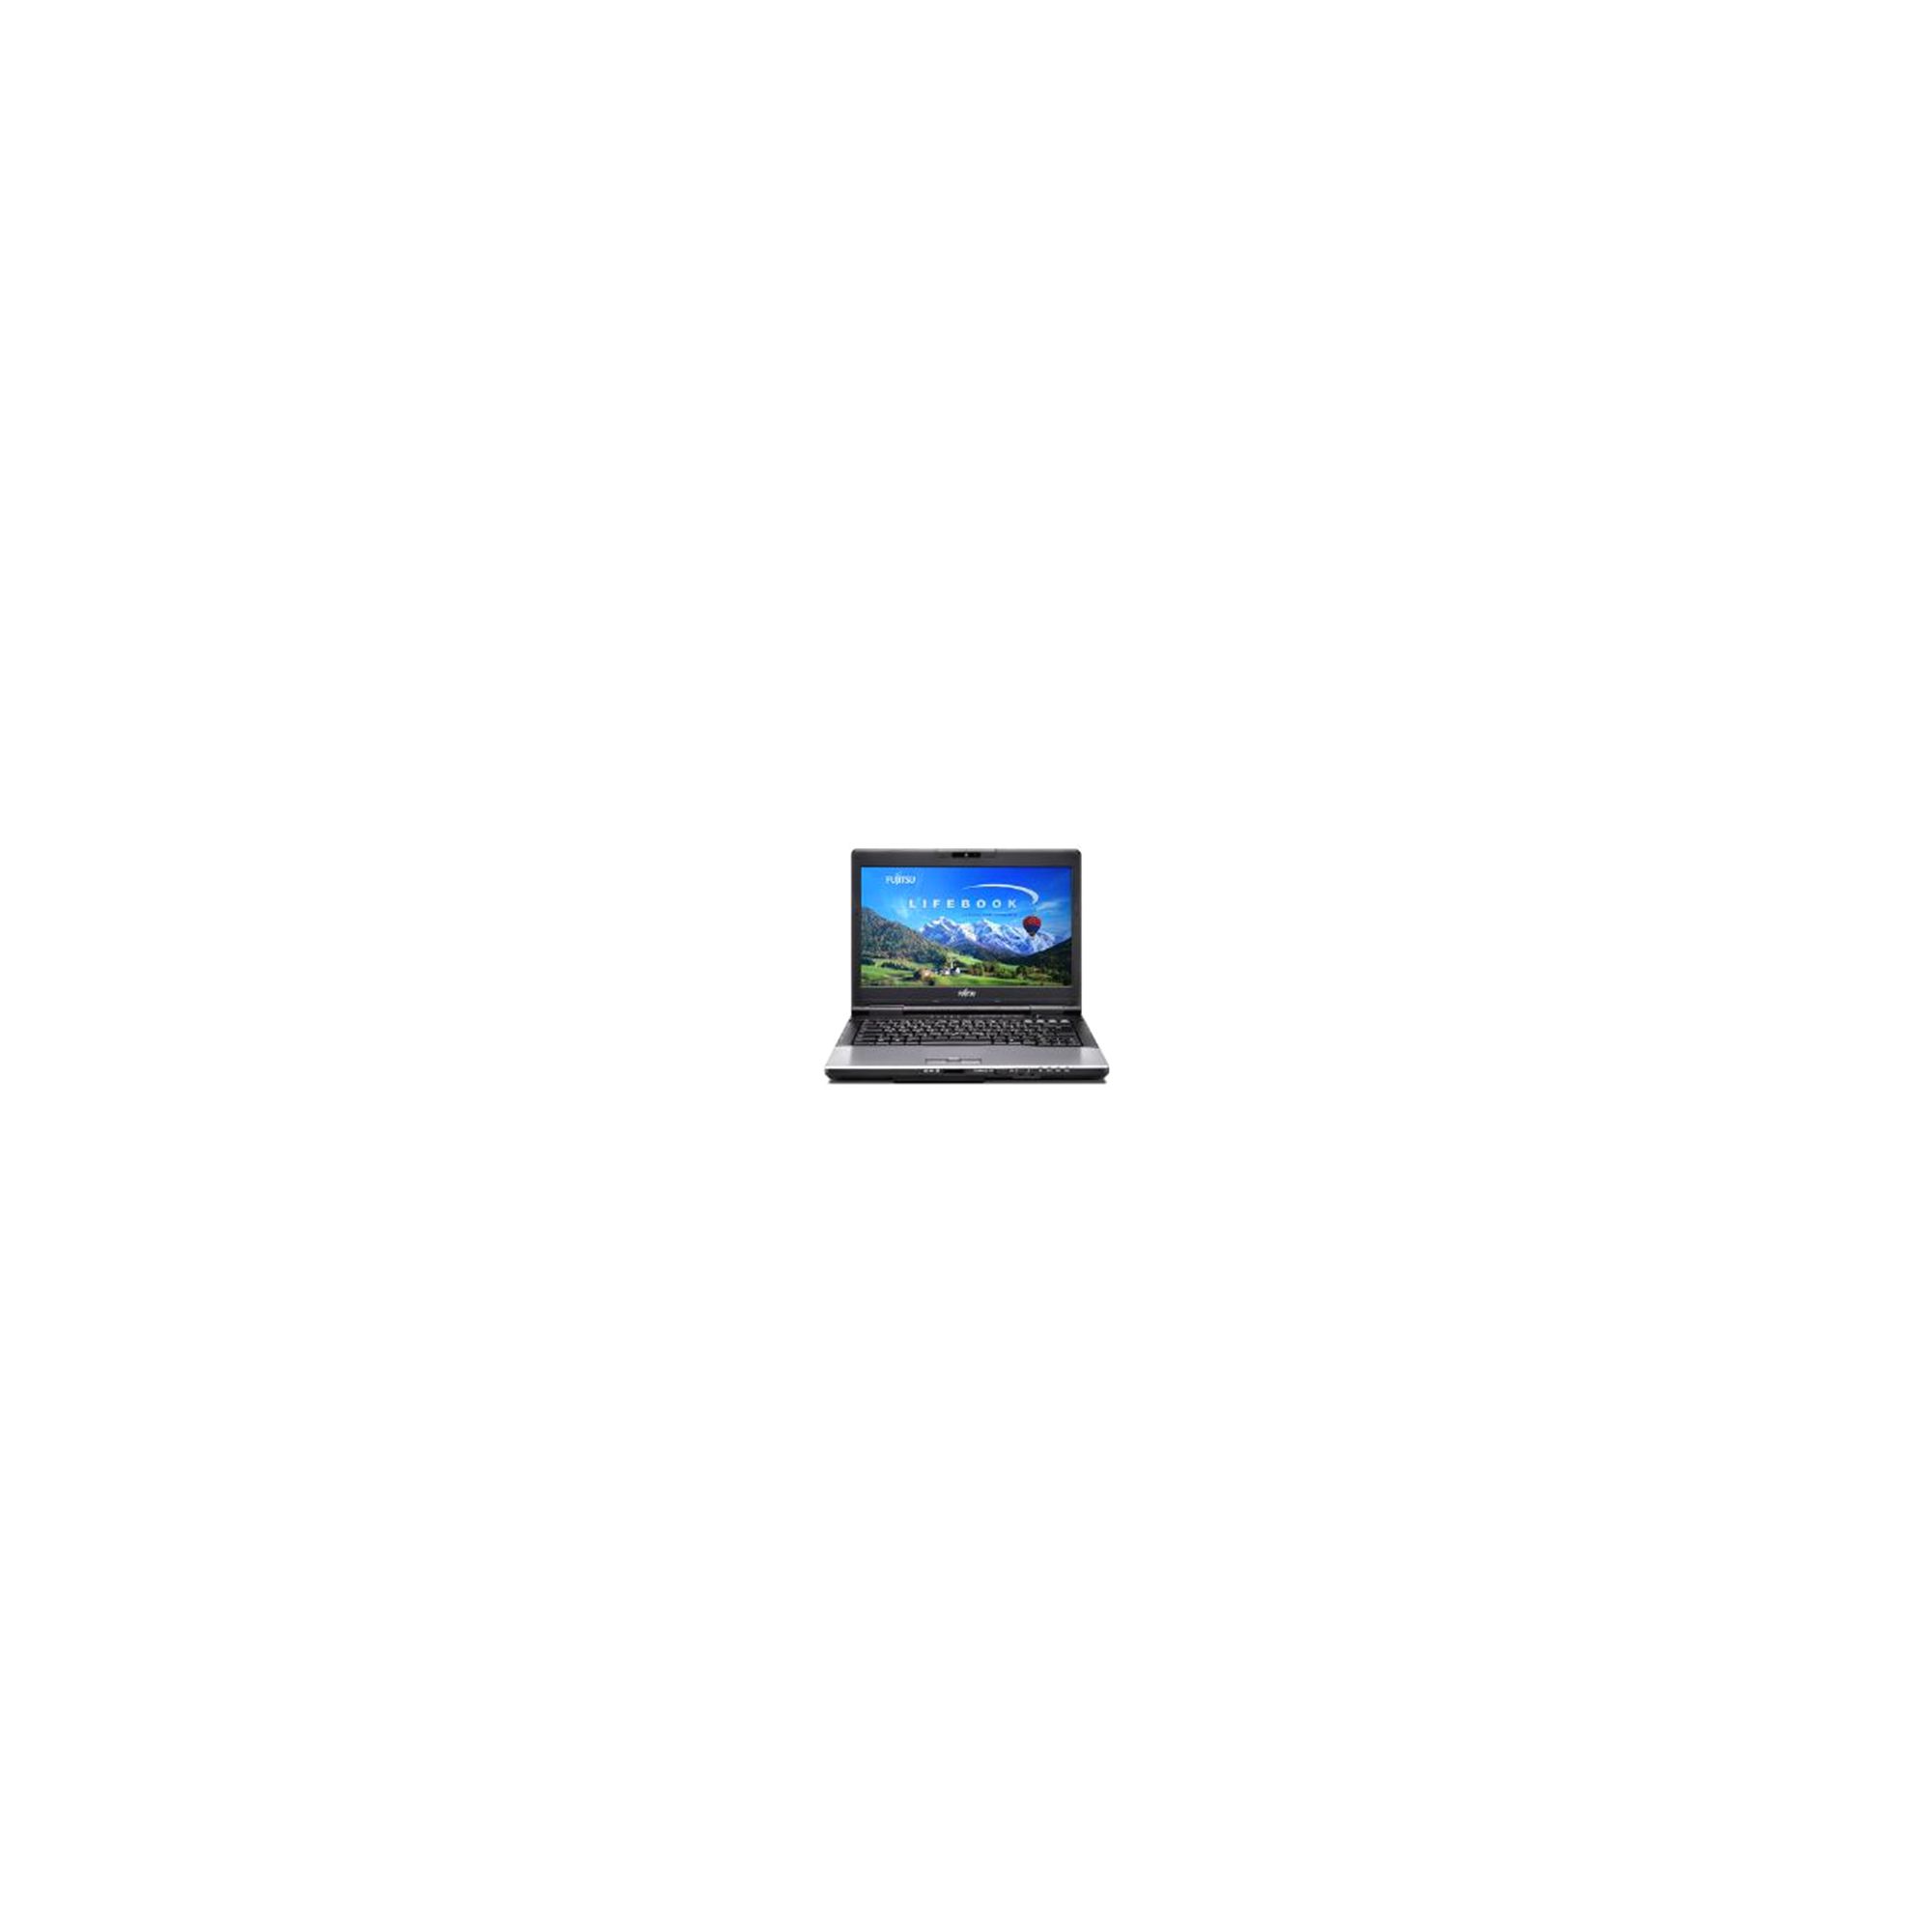 Fujitsu Lifebook S752 (14 inch) Notebook Core i5 (3230M) 2.6GHz 4GB 320GB DVD-RW BT Windows 7 Pro 64-bit + Windows 8 Pro (Intel HD Graphics) at Tesco Direct